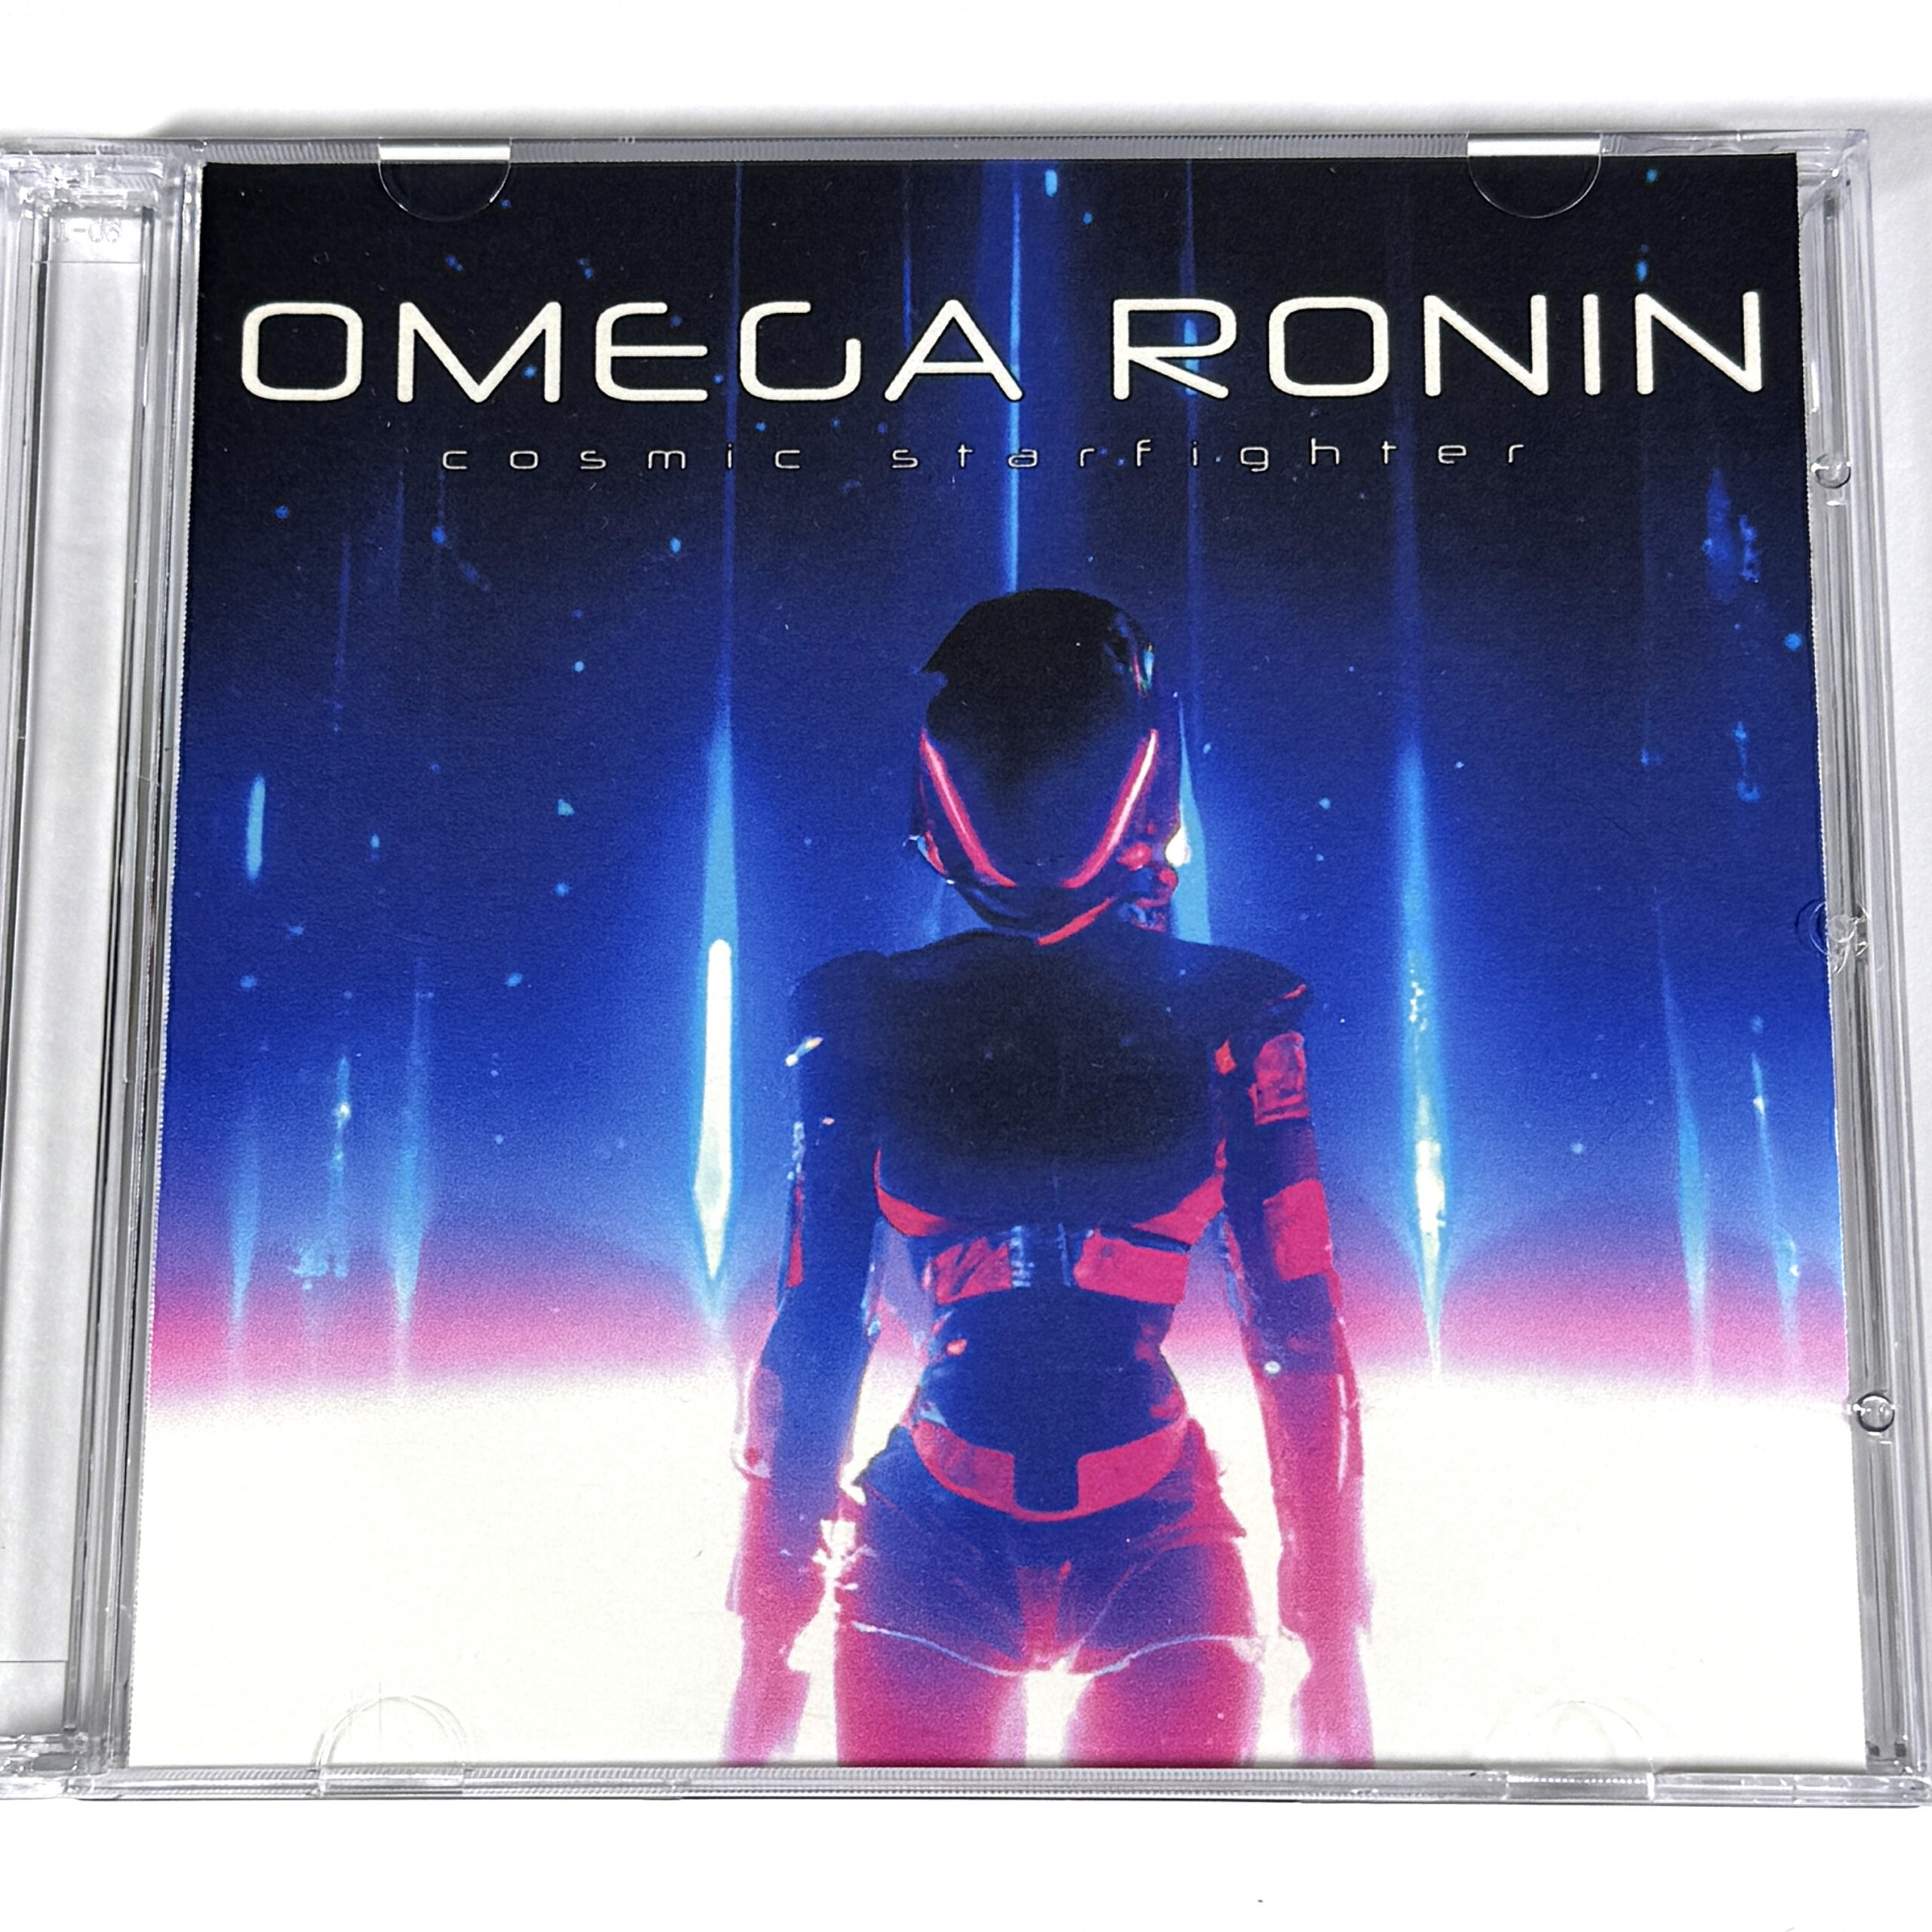 Omega Ronin: Cosmic Starfighter 2-CD Set